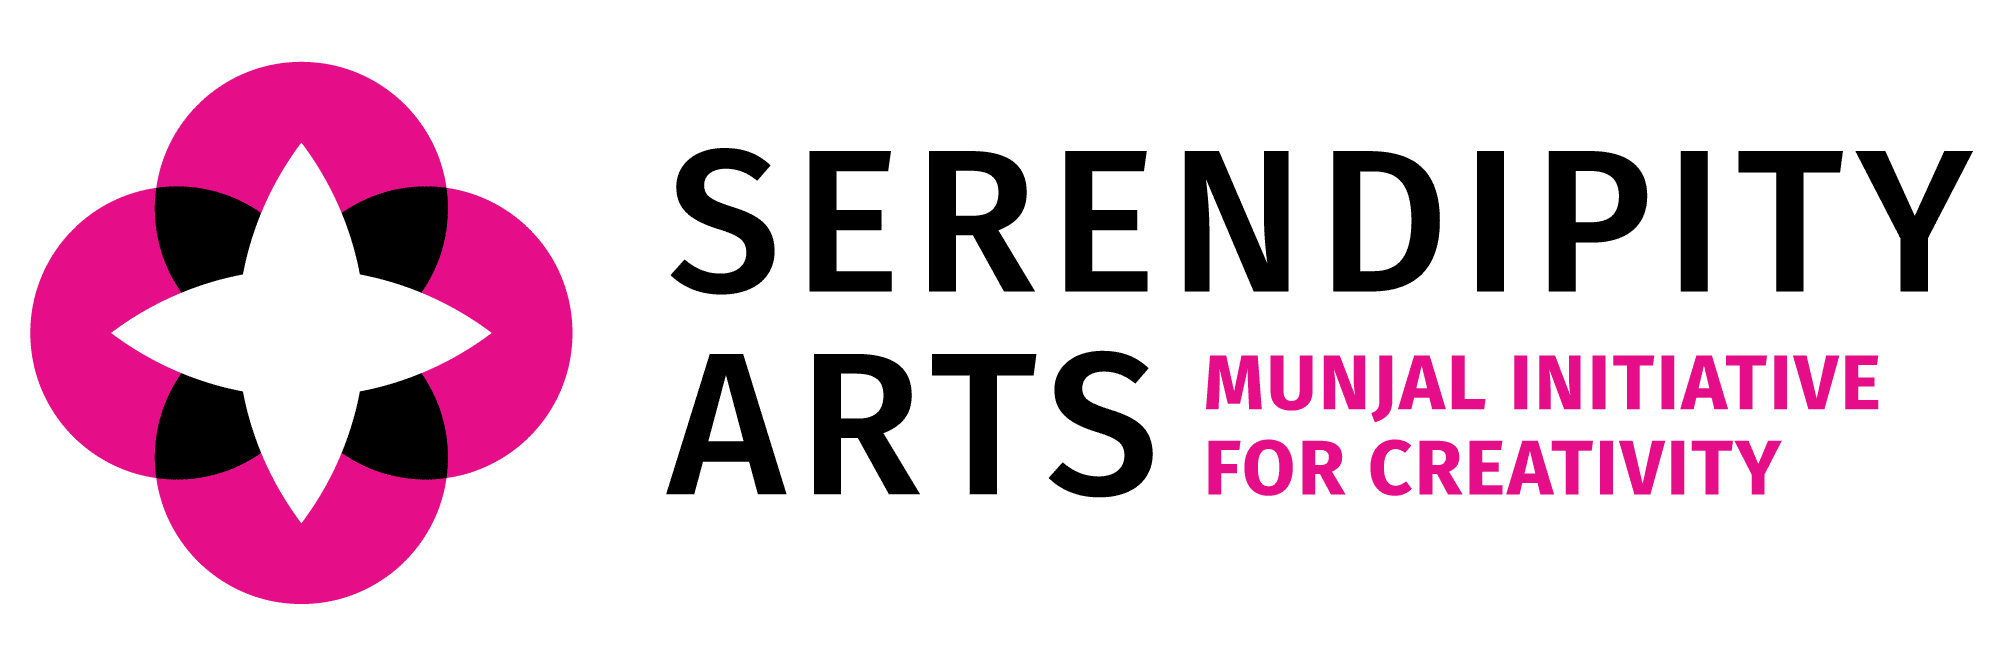 Serendipity Arts Logo